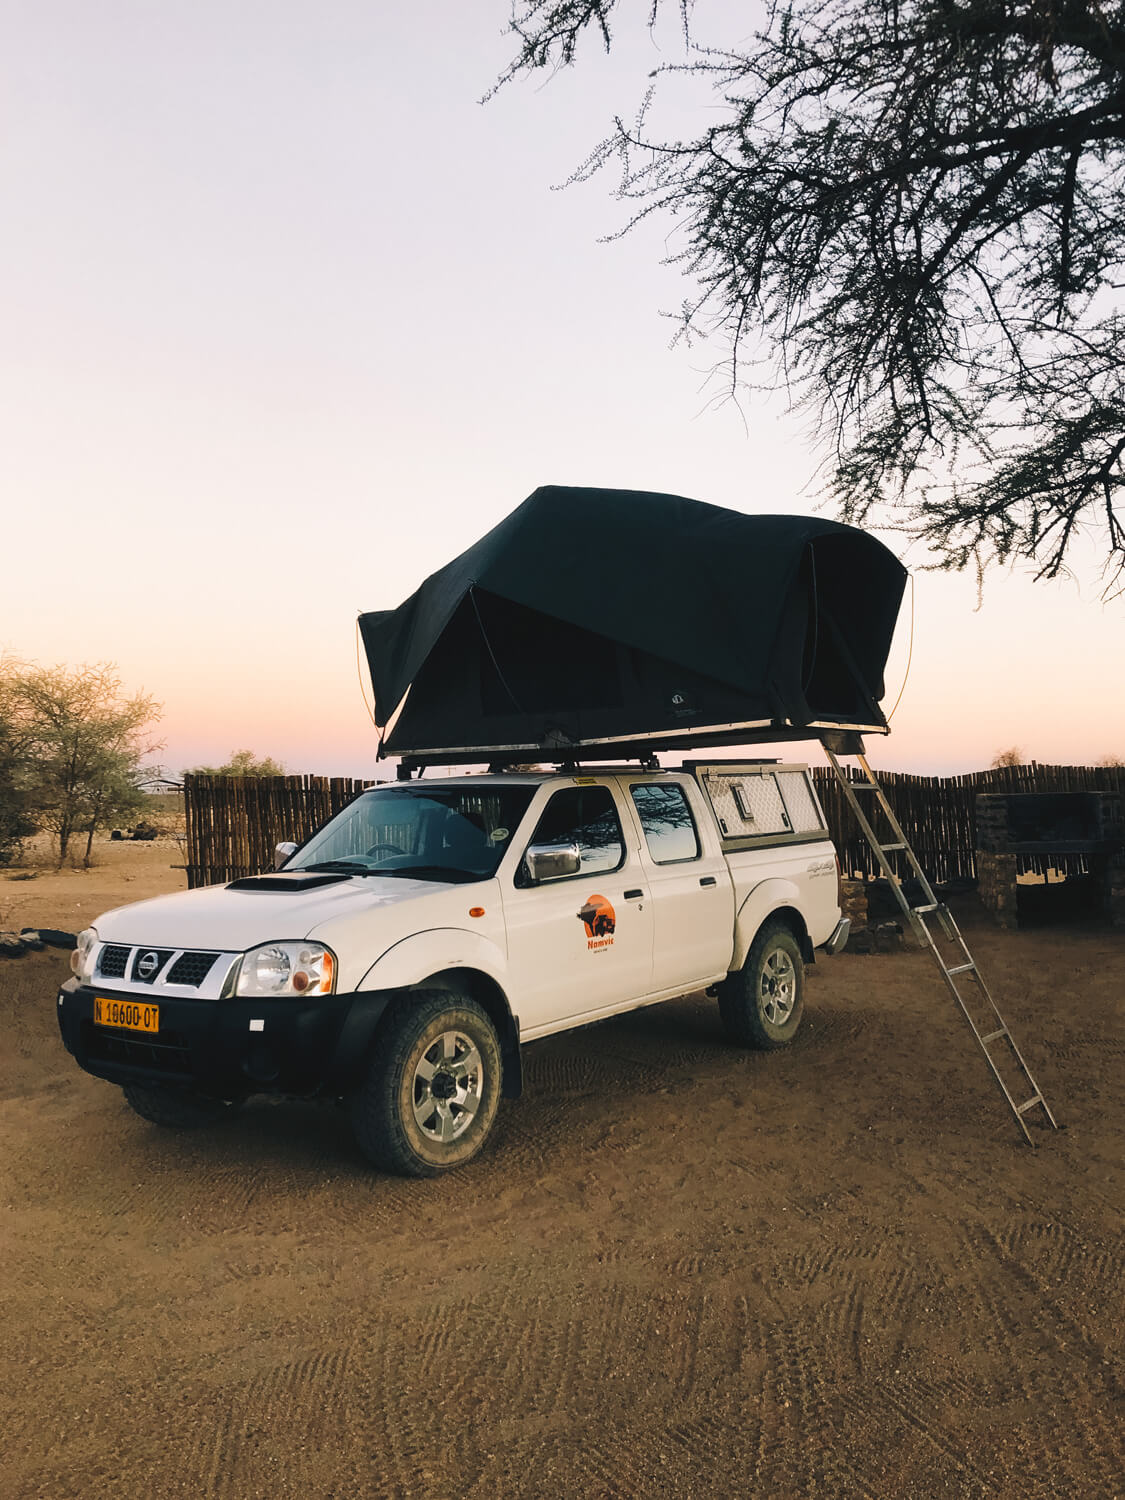 weltevrede guestfarm lodge camping namibie c19 road solitaire